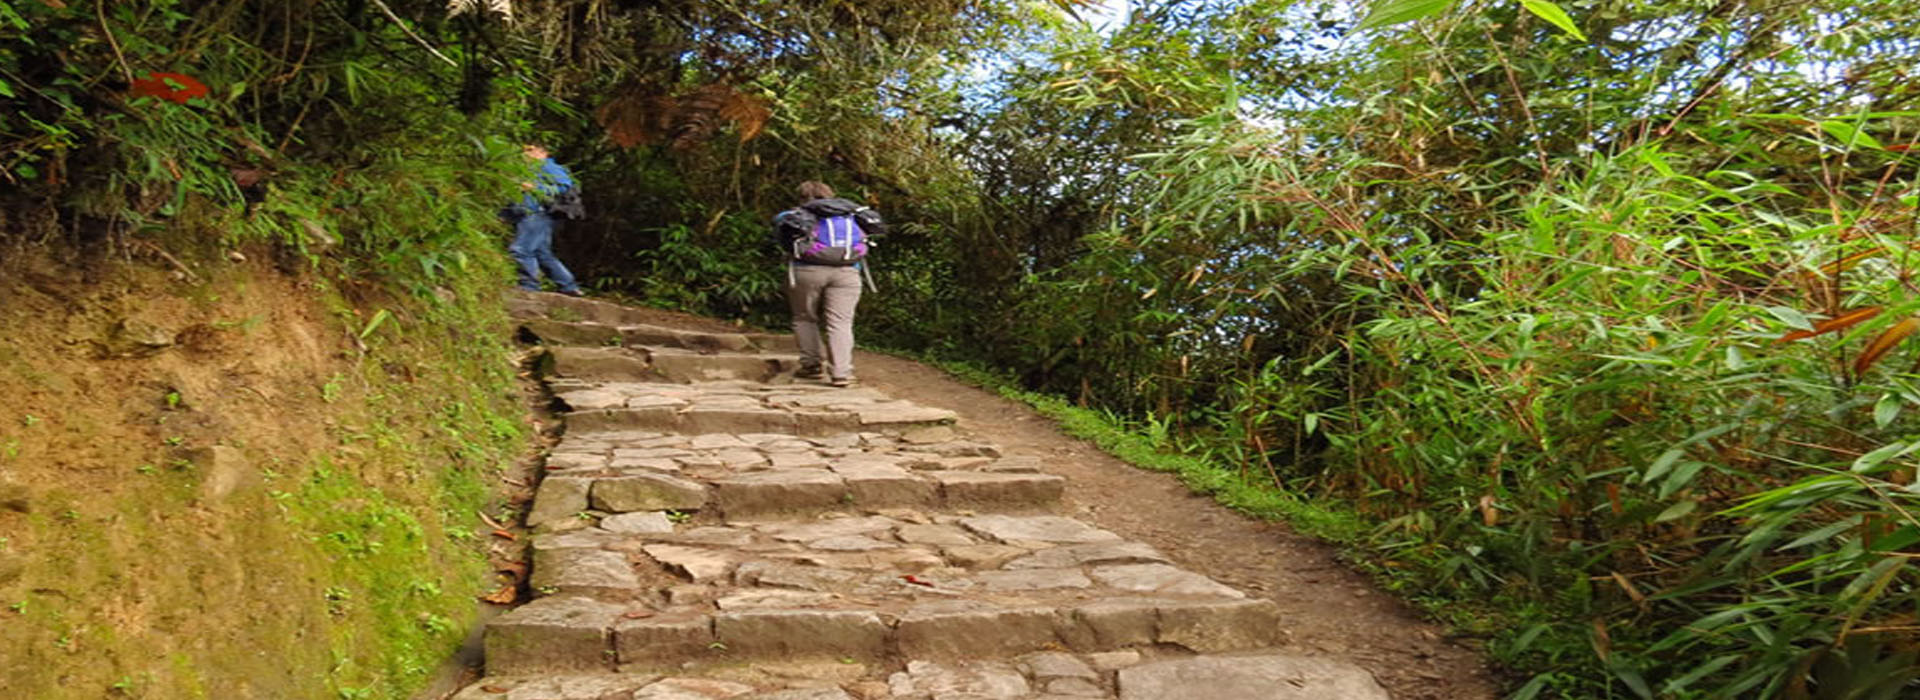 Salkantay Trek to Machu Picchu 4 days return by bus last day